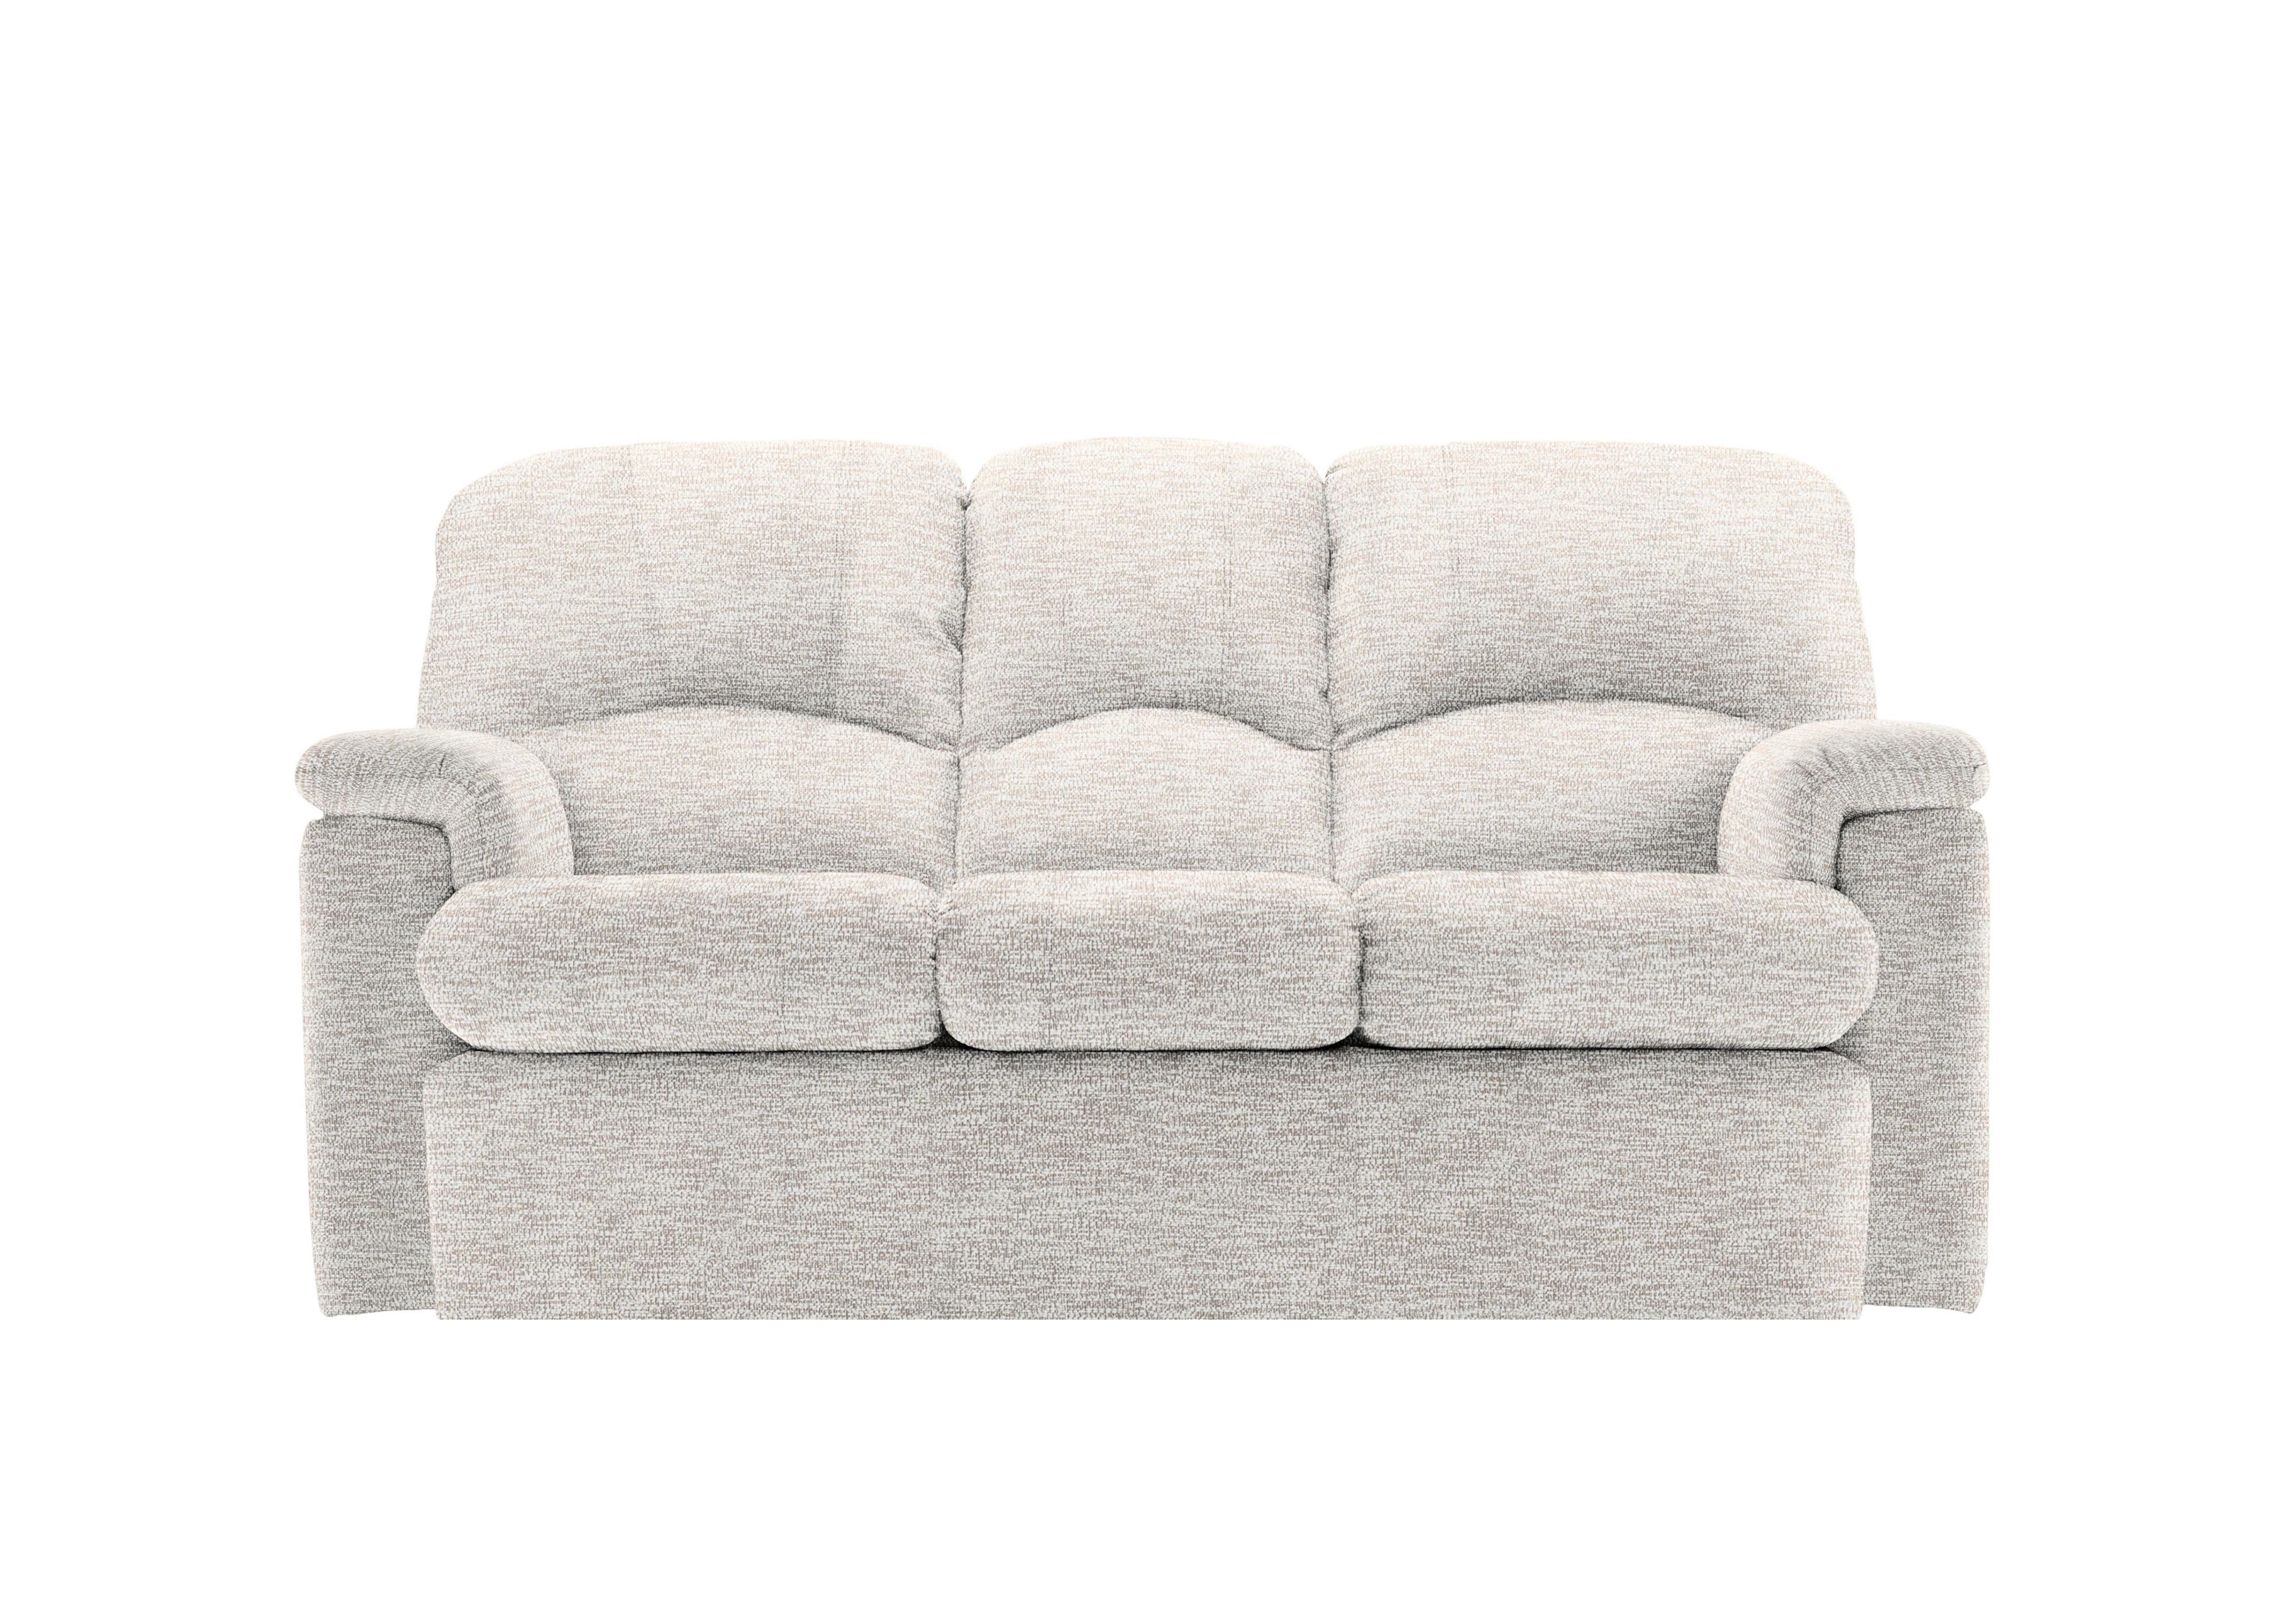 Chloe Small Fabric 3 Seater Sofa in C931 Rush Cream on Furniture Village